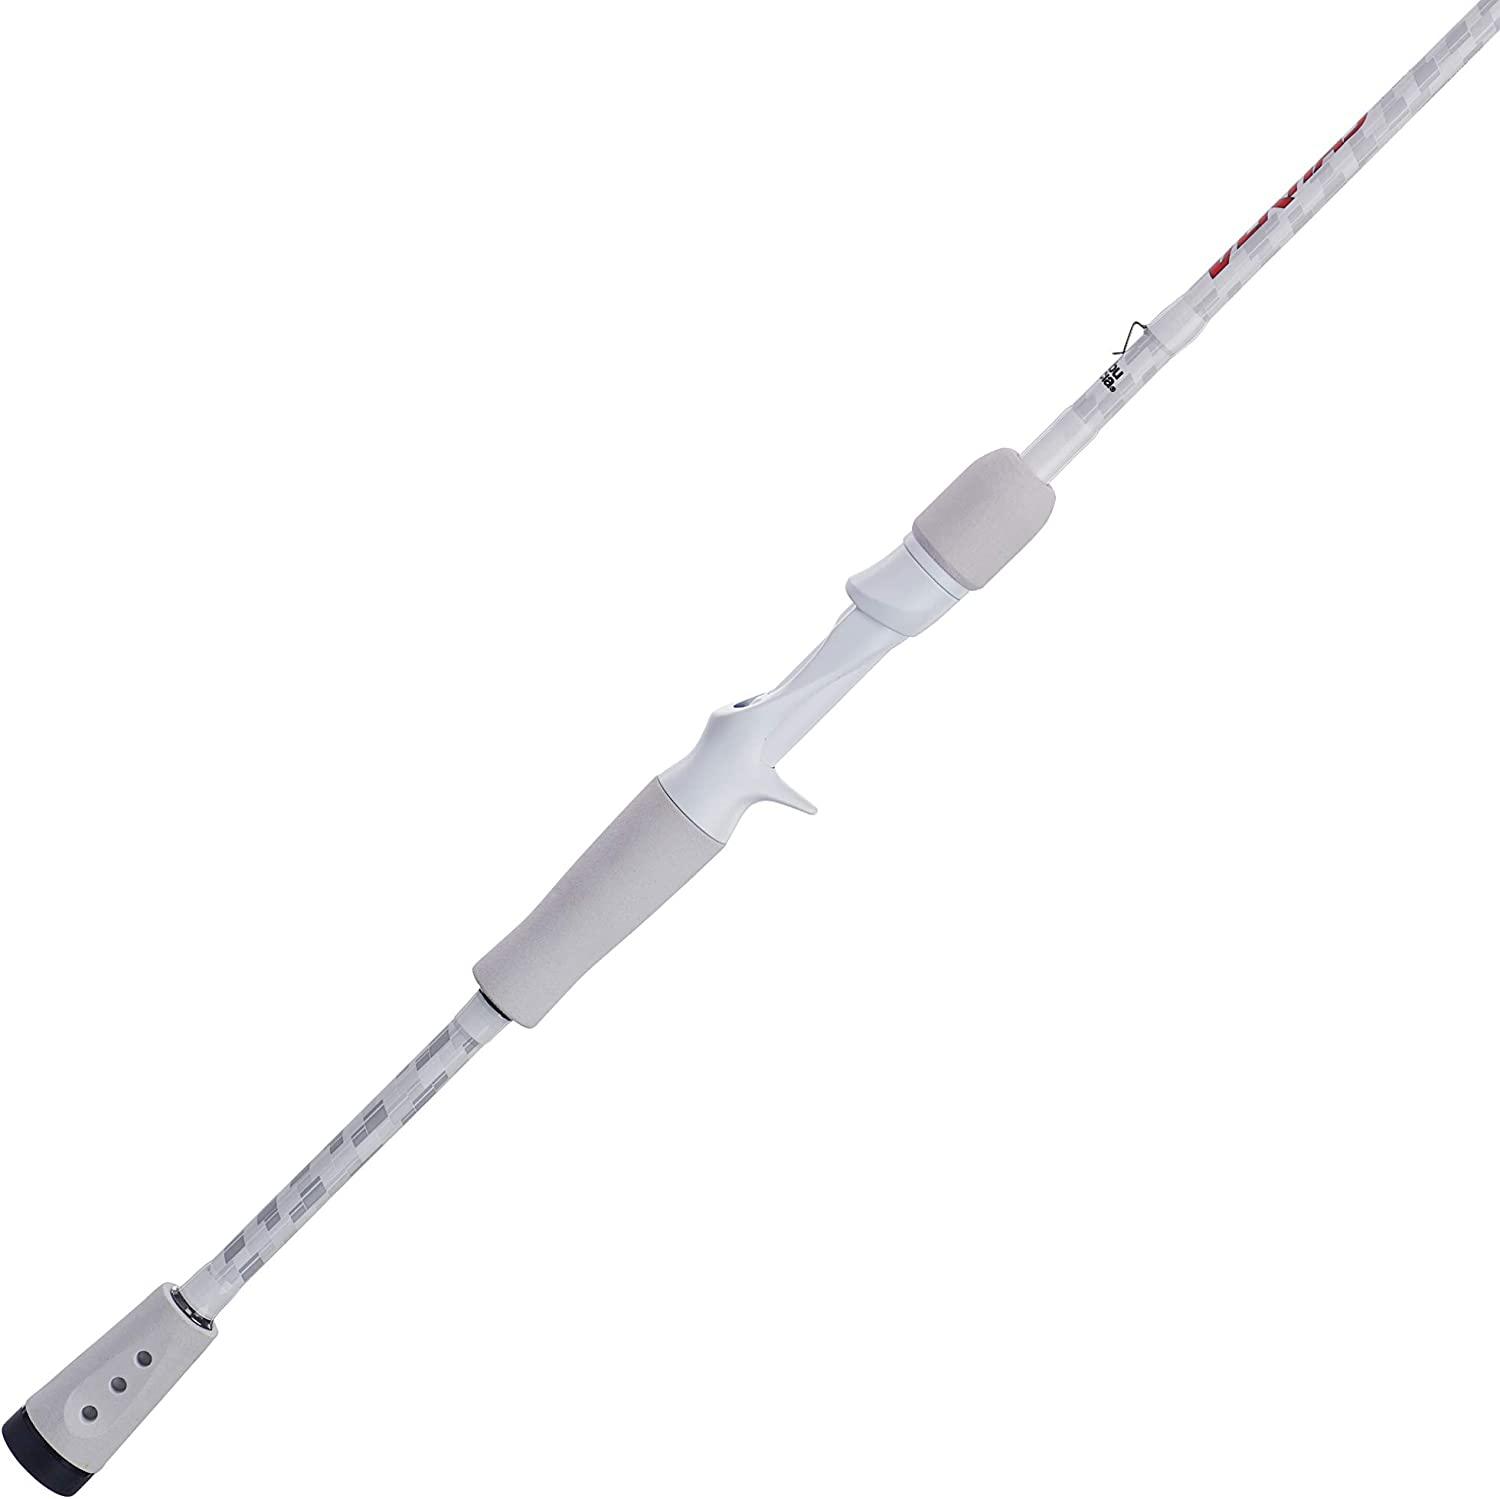 Abu Garcia Veritas Rod - Best Baitcasting Rod For Light Lures